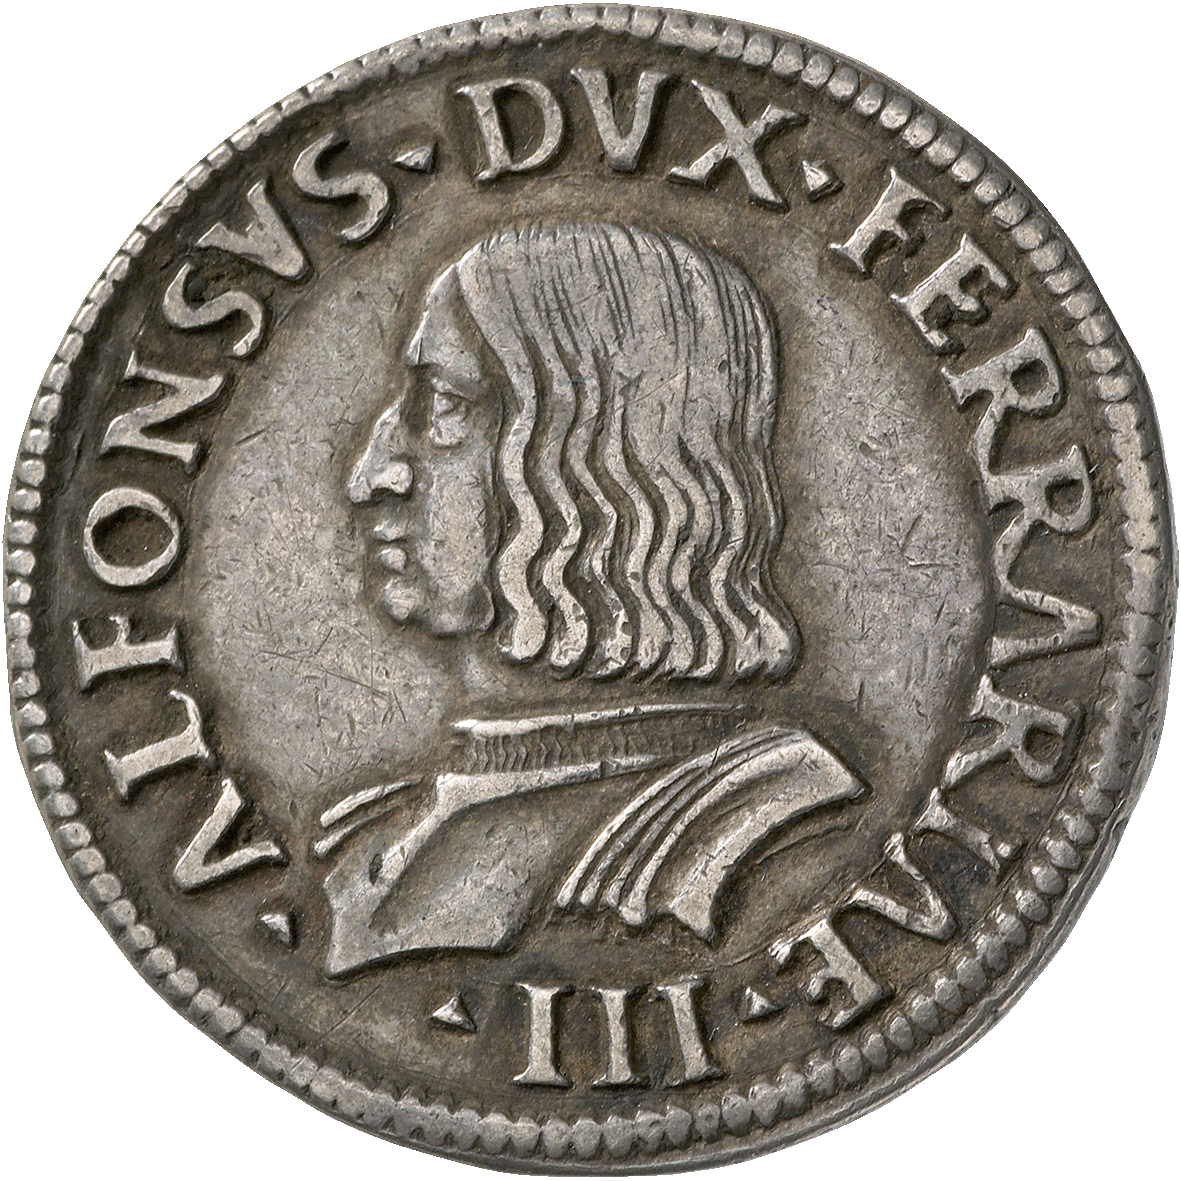 Duchy of Ferrara, Alfonso I d'Este, Testone (obverse)